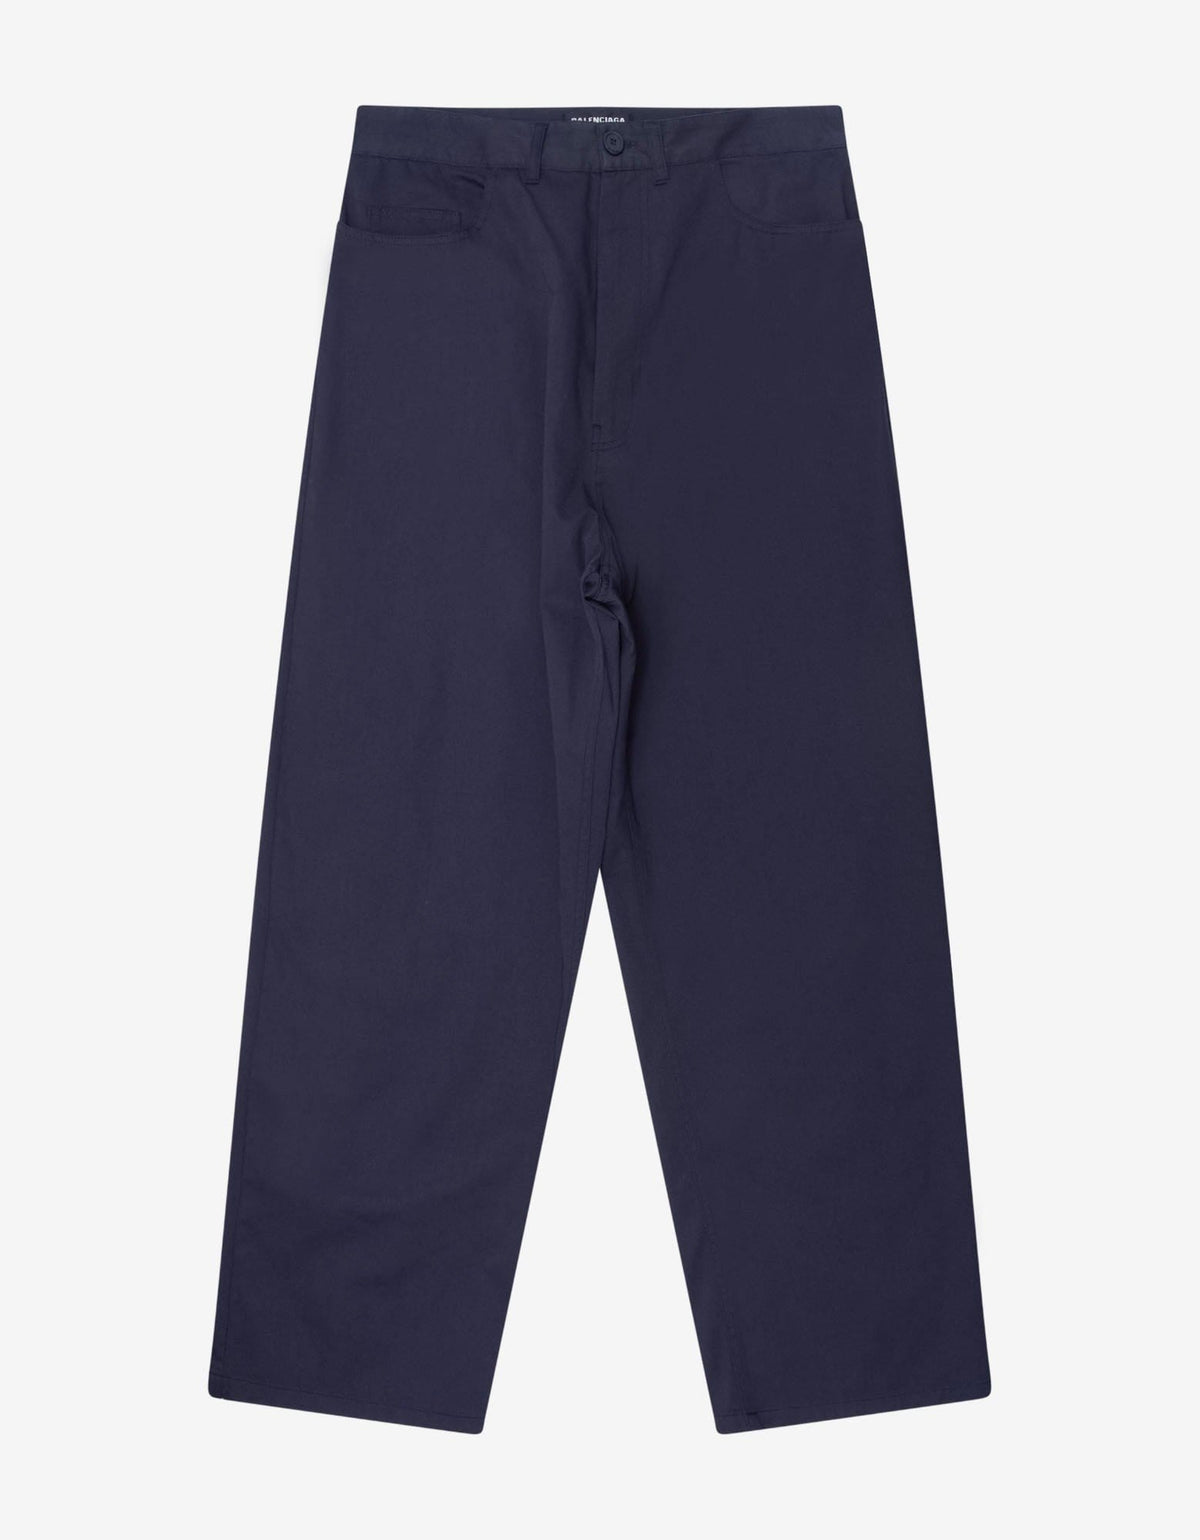 Balenciaga Navy Blue Baggy Chino Trousers